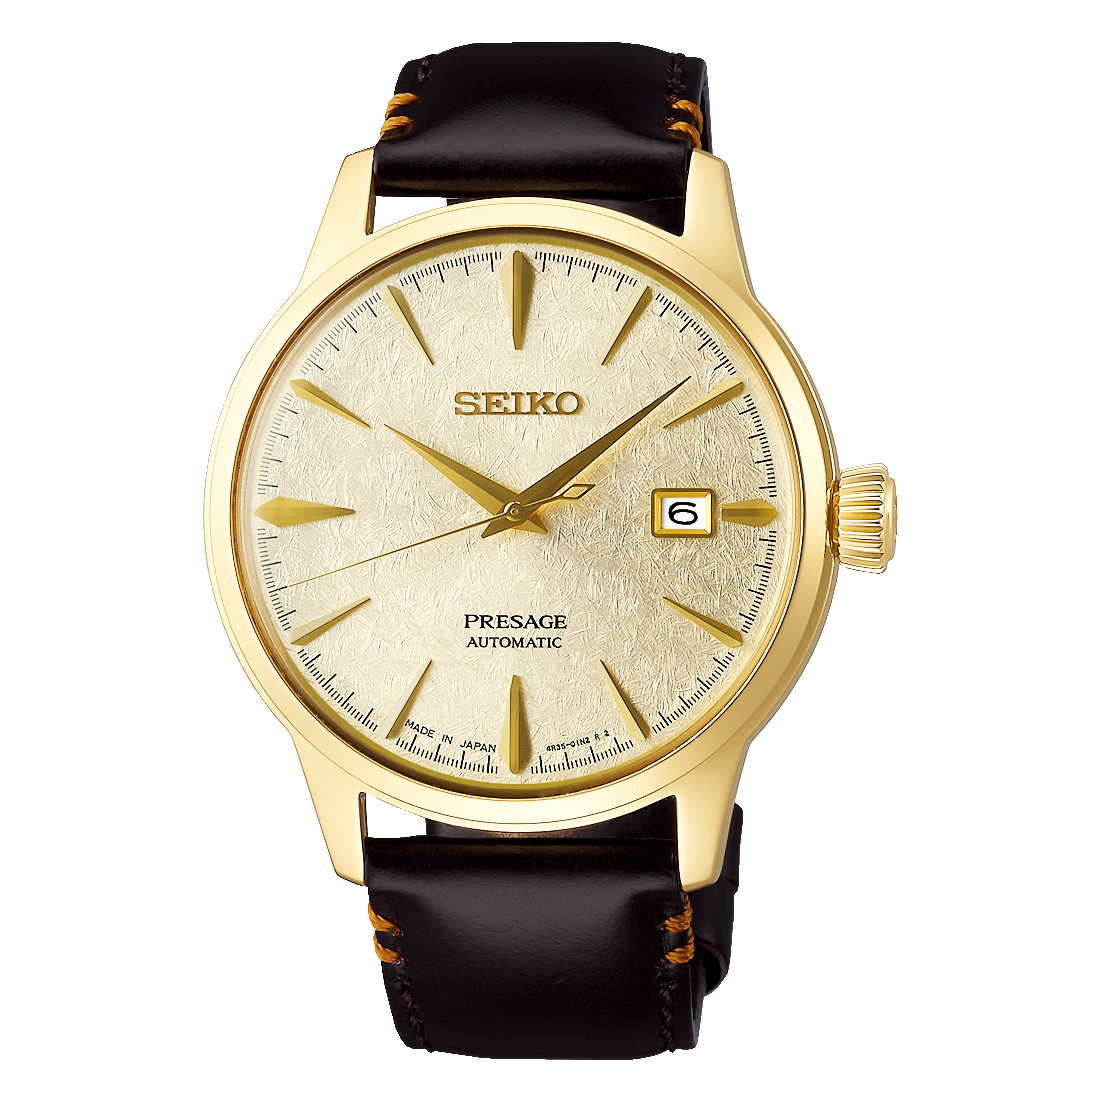 SRPH78J1 | Seiko Watch Corporation